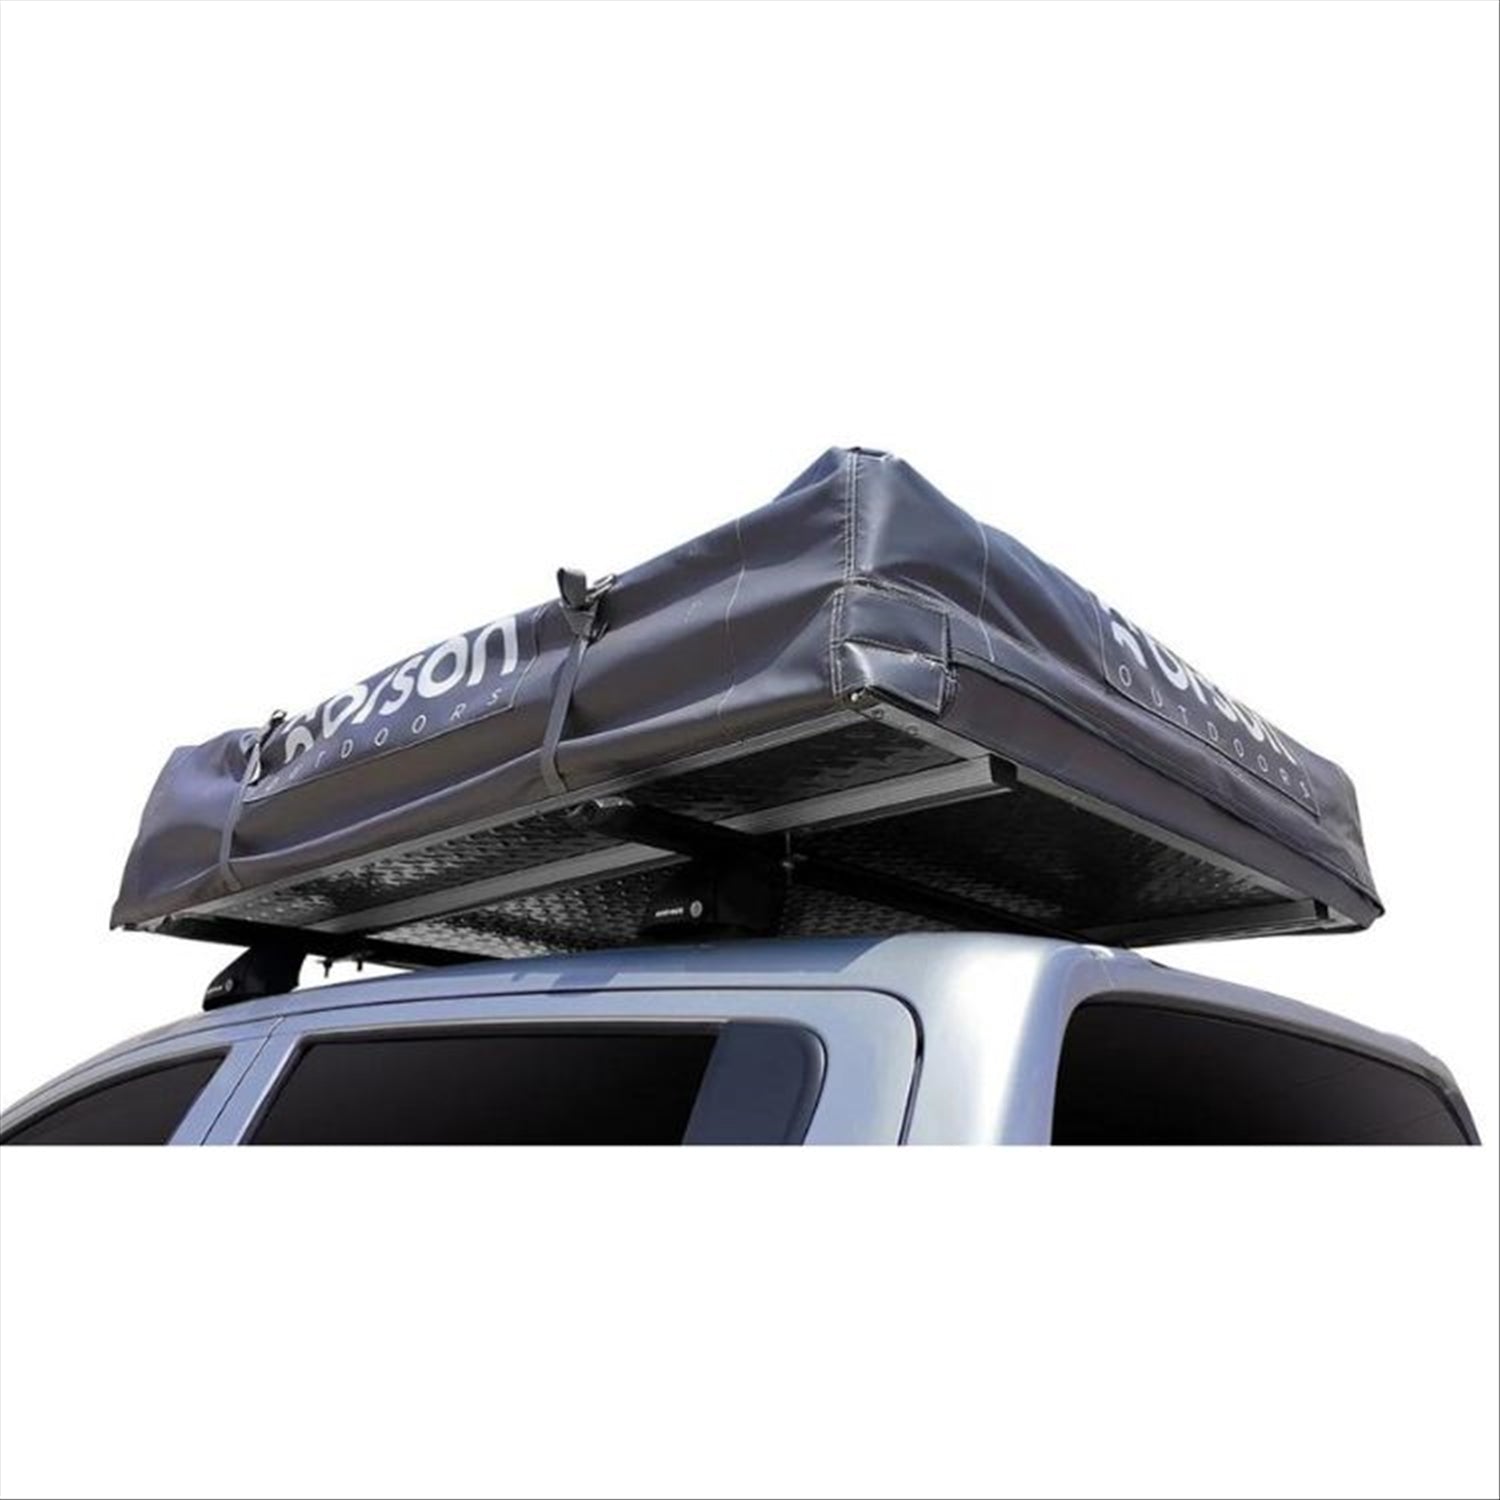 Orson A2R Roof Top Tent - Aluminium tread Plate Base